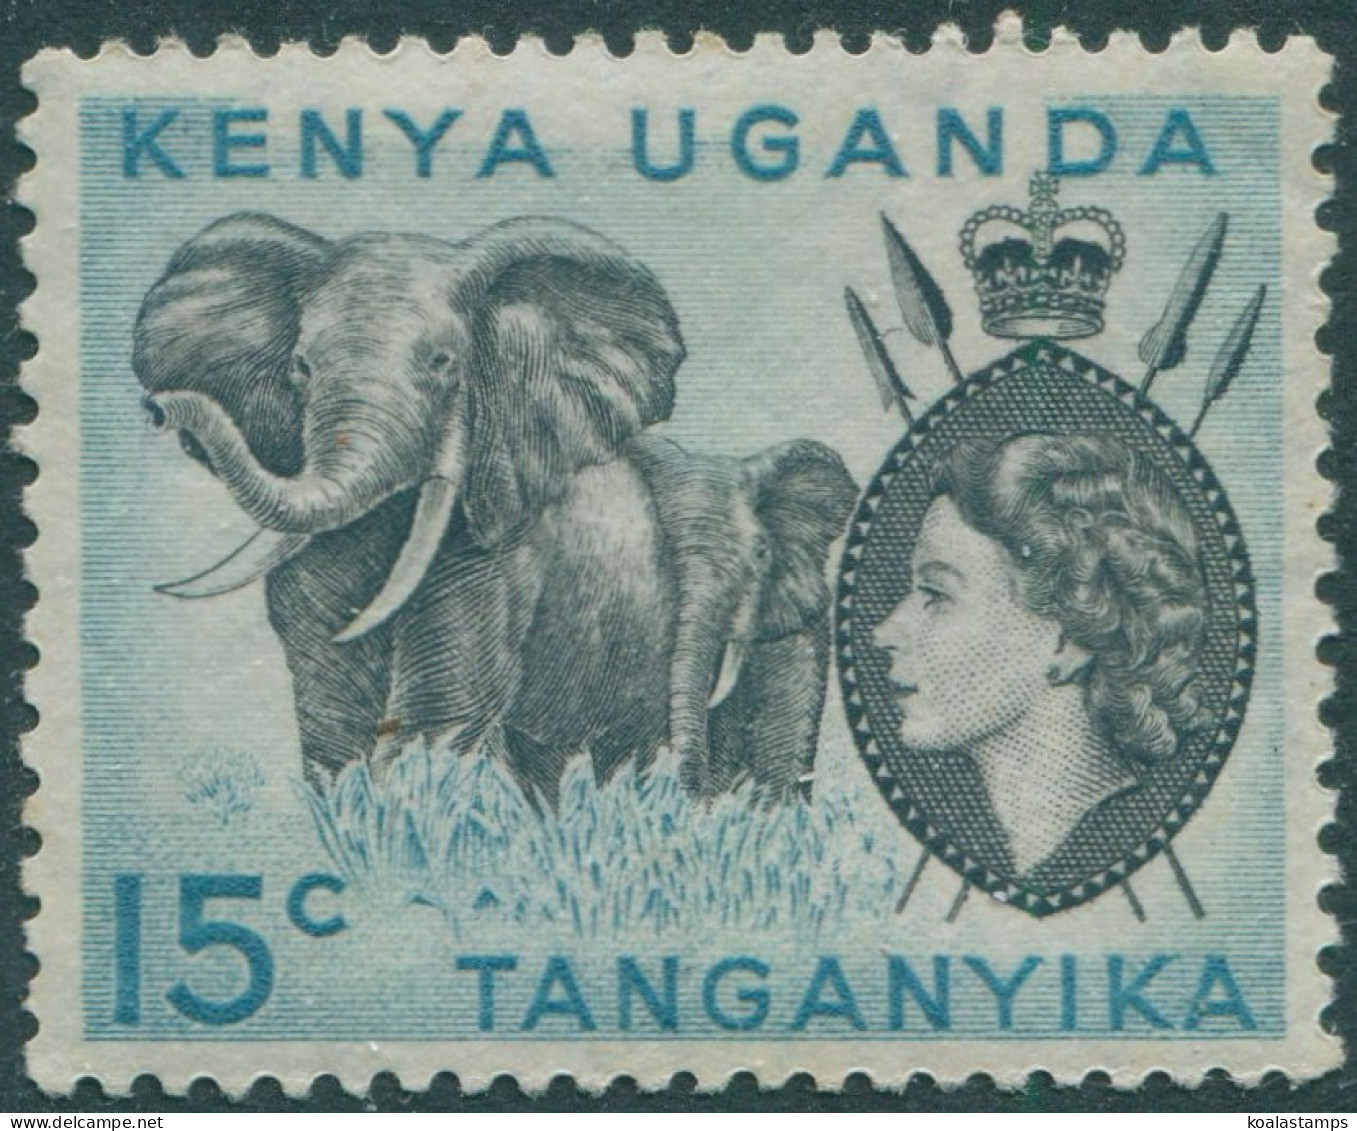 Kenya Uganda And Tanganyika 1954 SG169 15c QEII Elephants MNH (amd) - Kenya, Uganda & Tanganyika